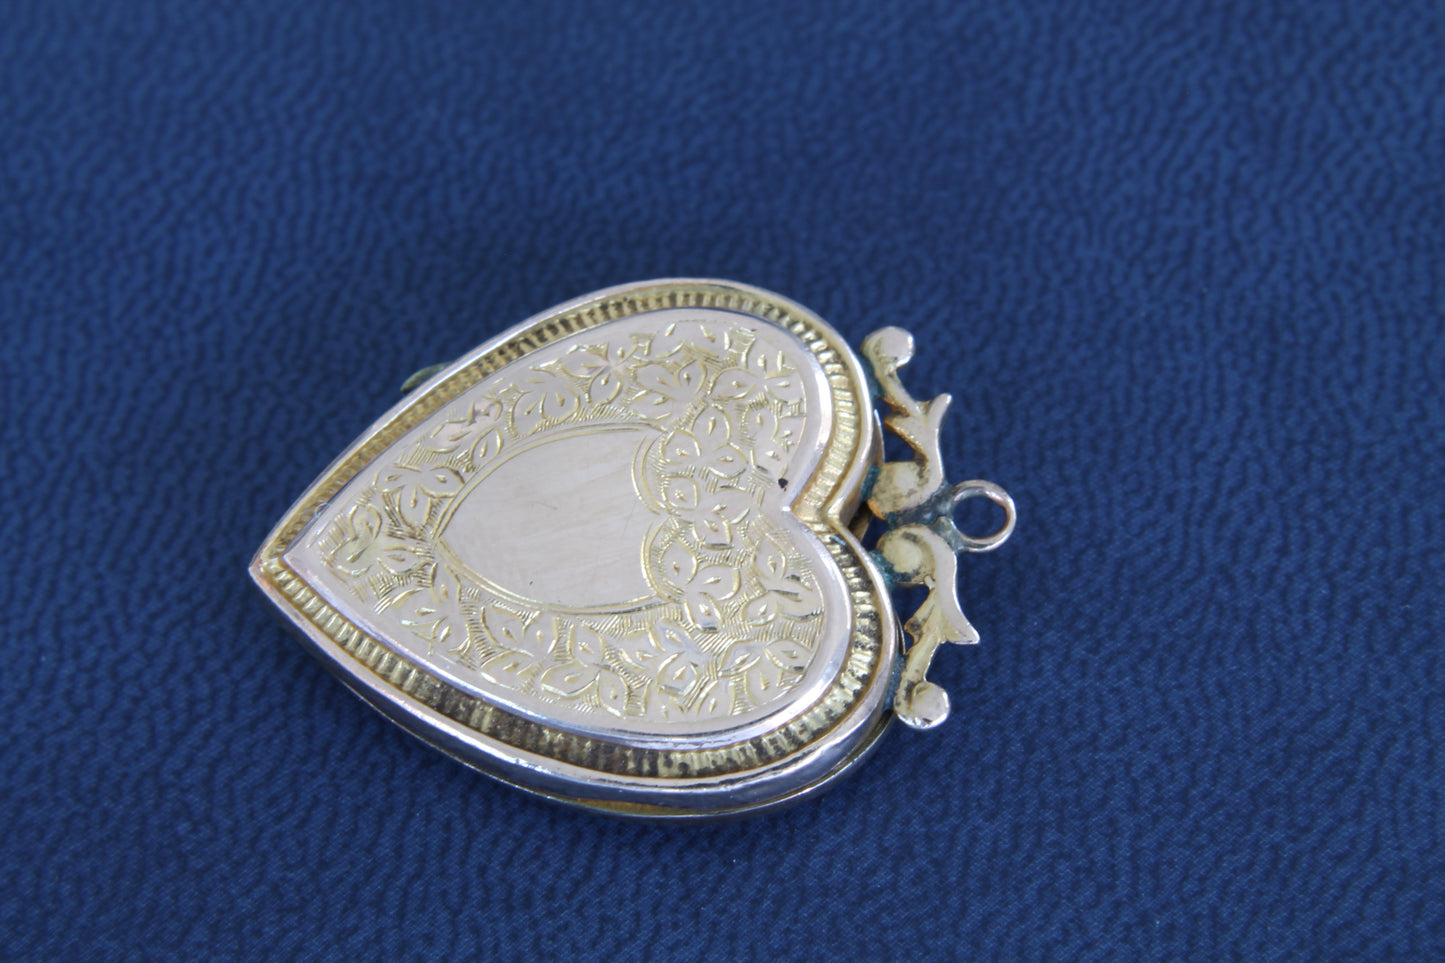 decorative-edwardian-9ct-gold-back-front-heart-locket